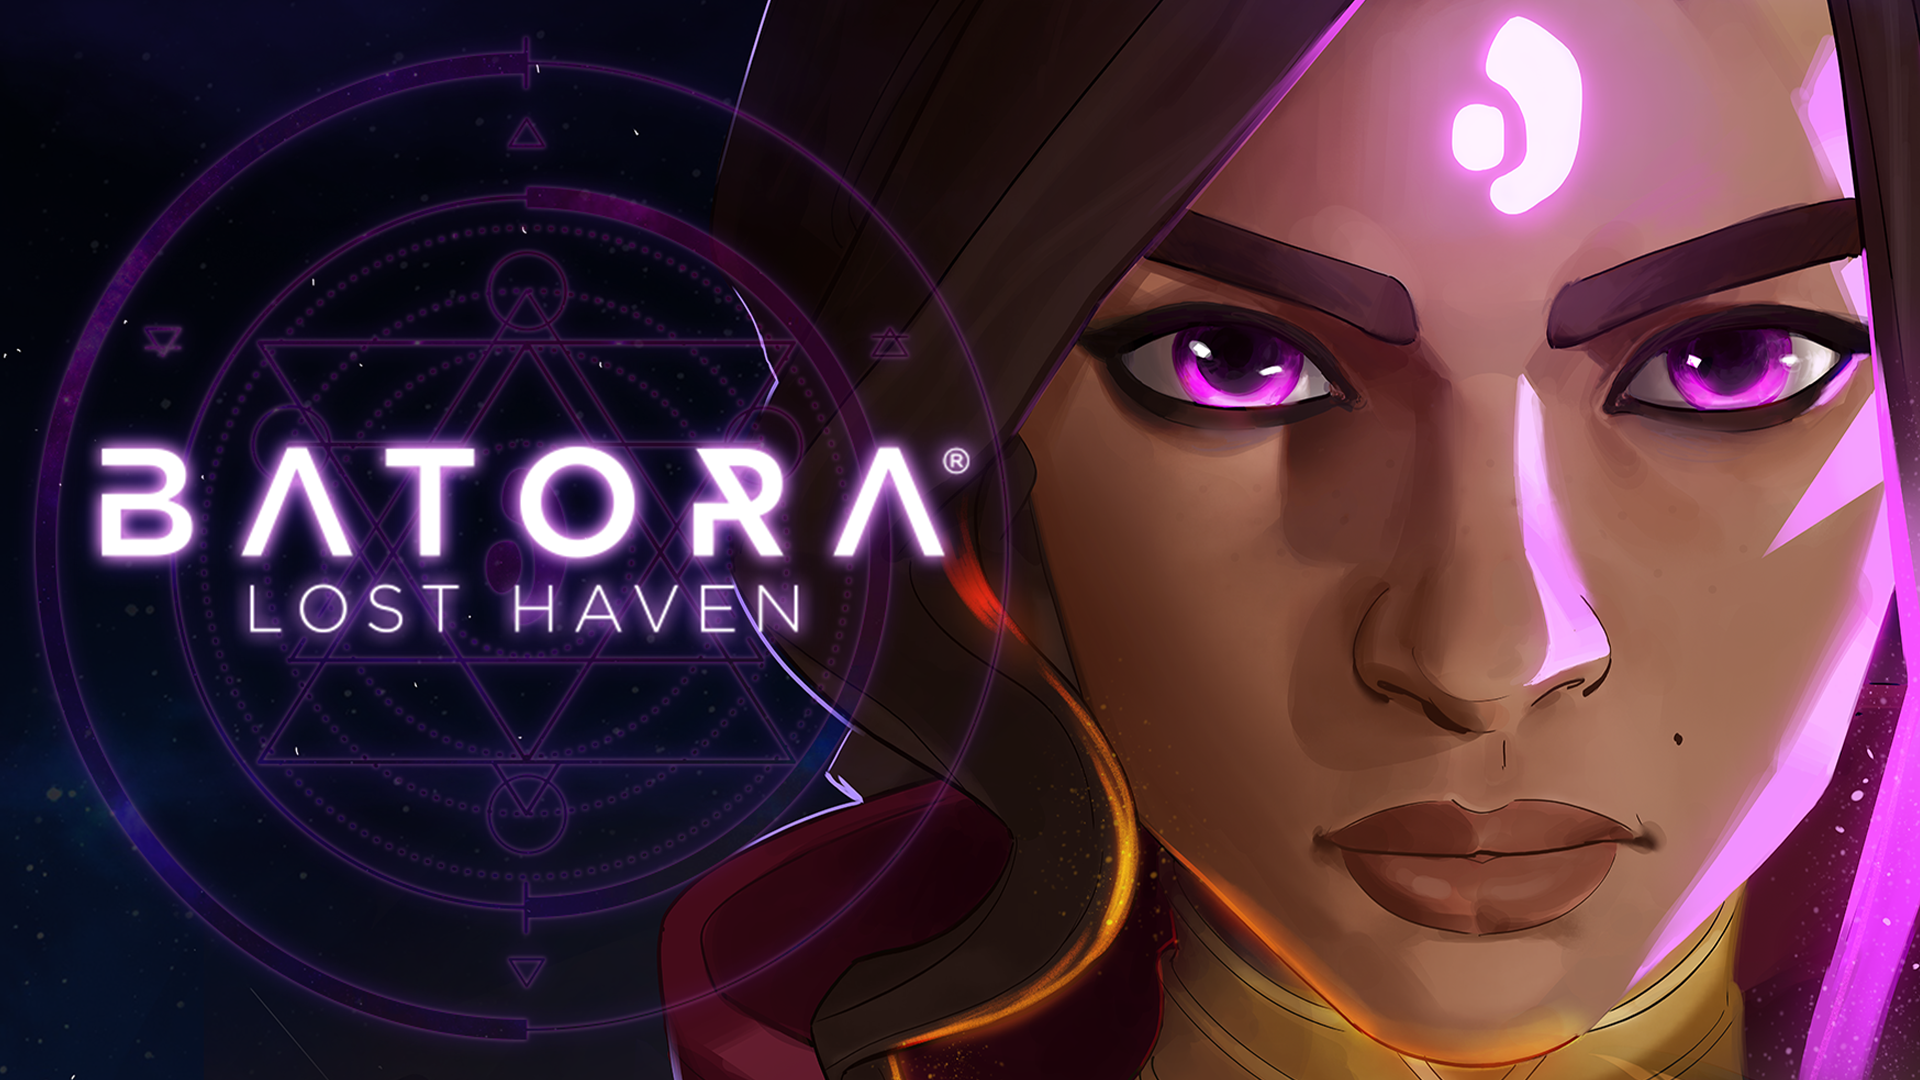 download the last version for ios Batora: Lost Haven